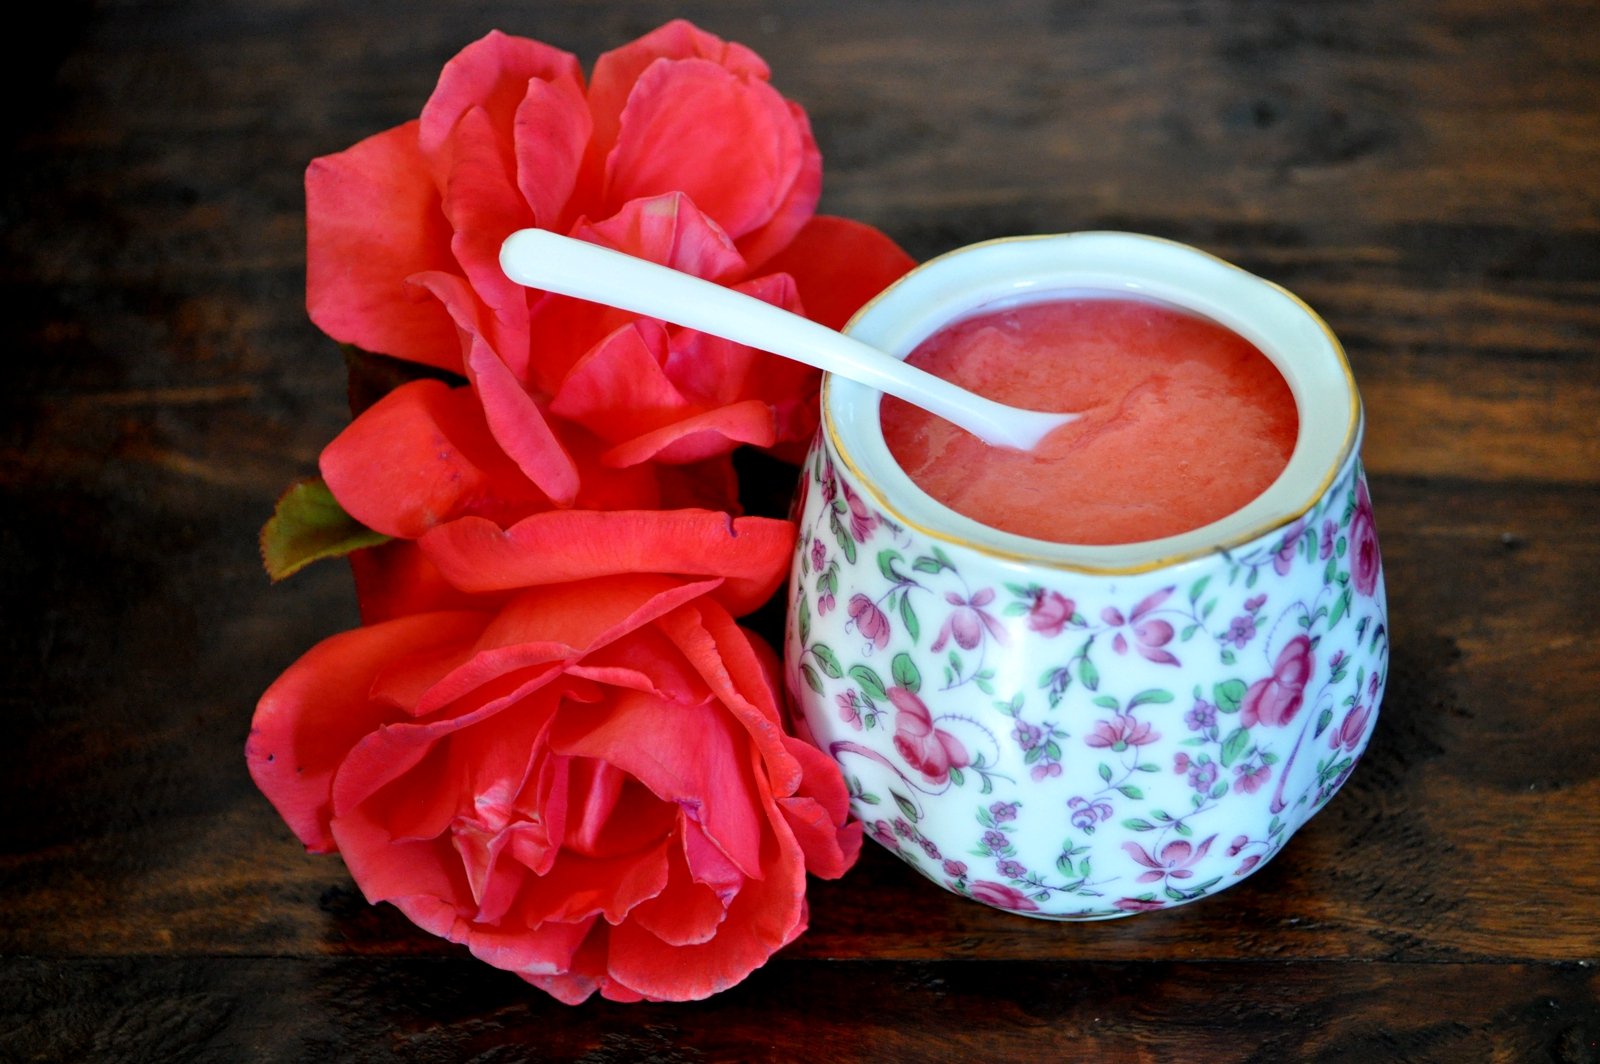 How to try gulbeseker - jam of rose petals in Antalya